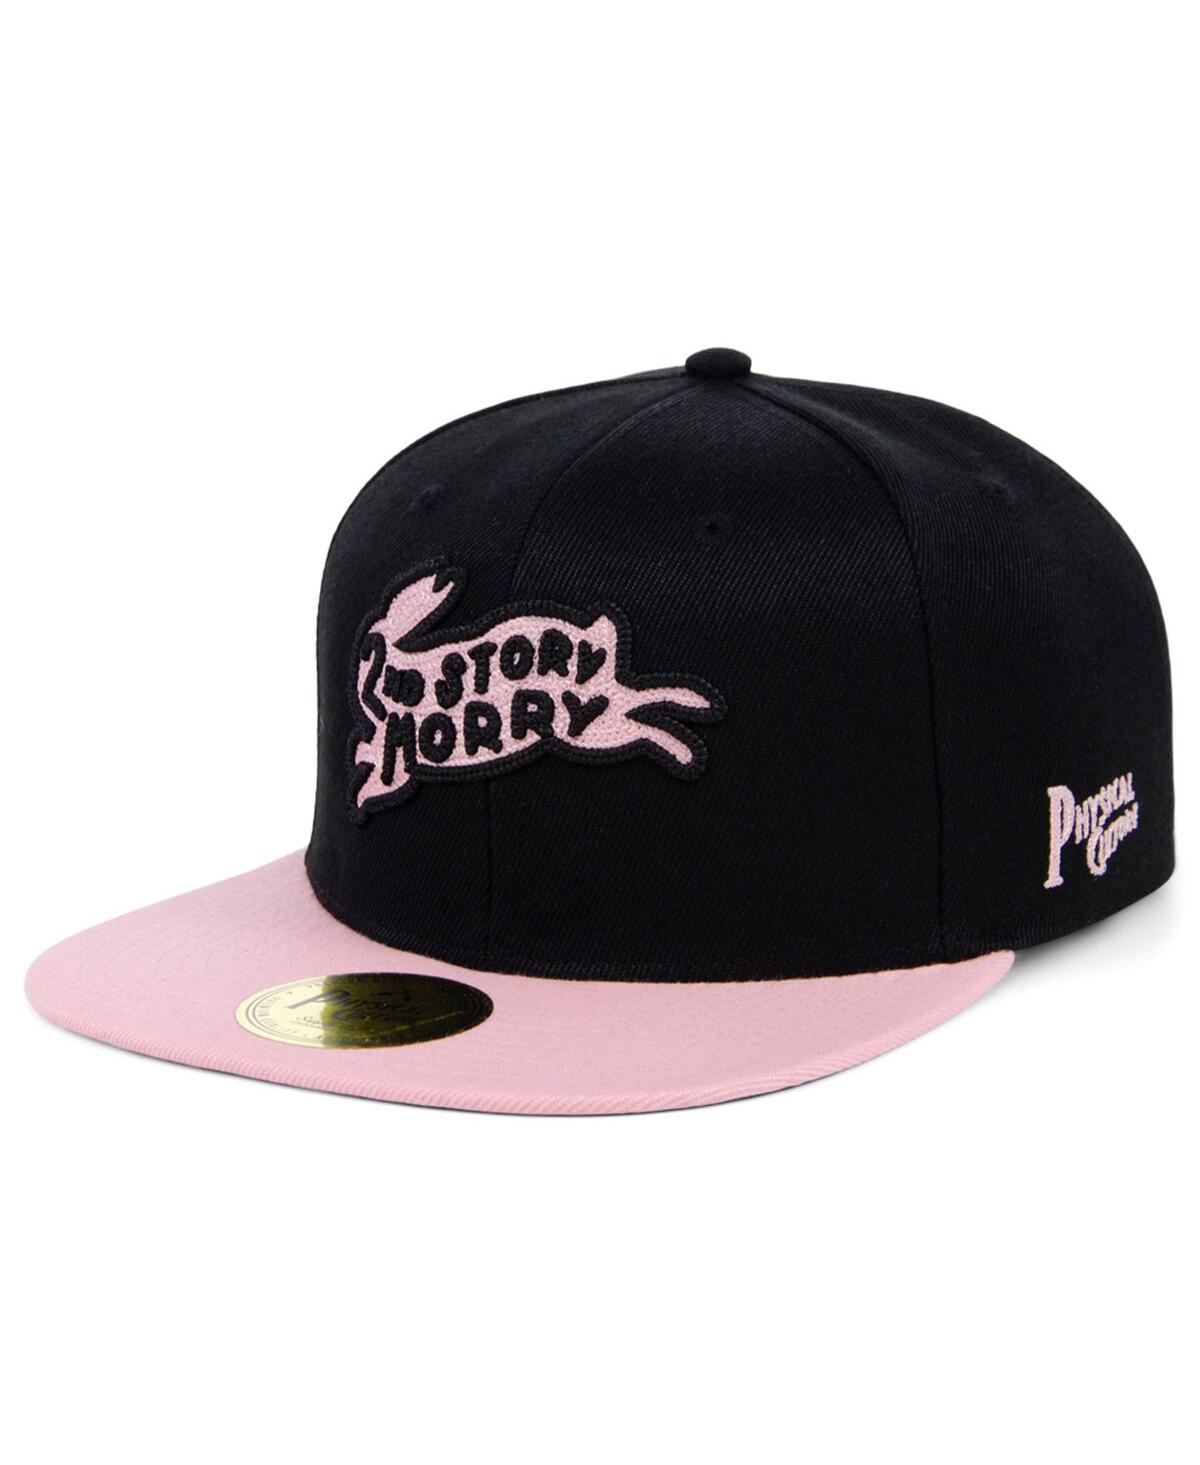 Shop Physical Culture Men's  Black Second Story Morrys Black Fives Snapback Adjustable Hat